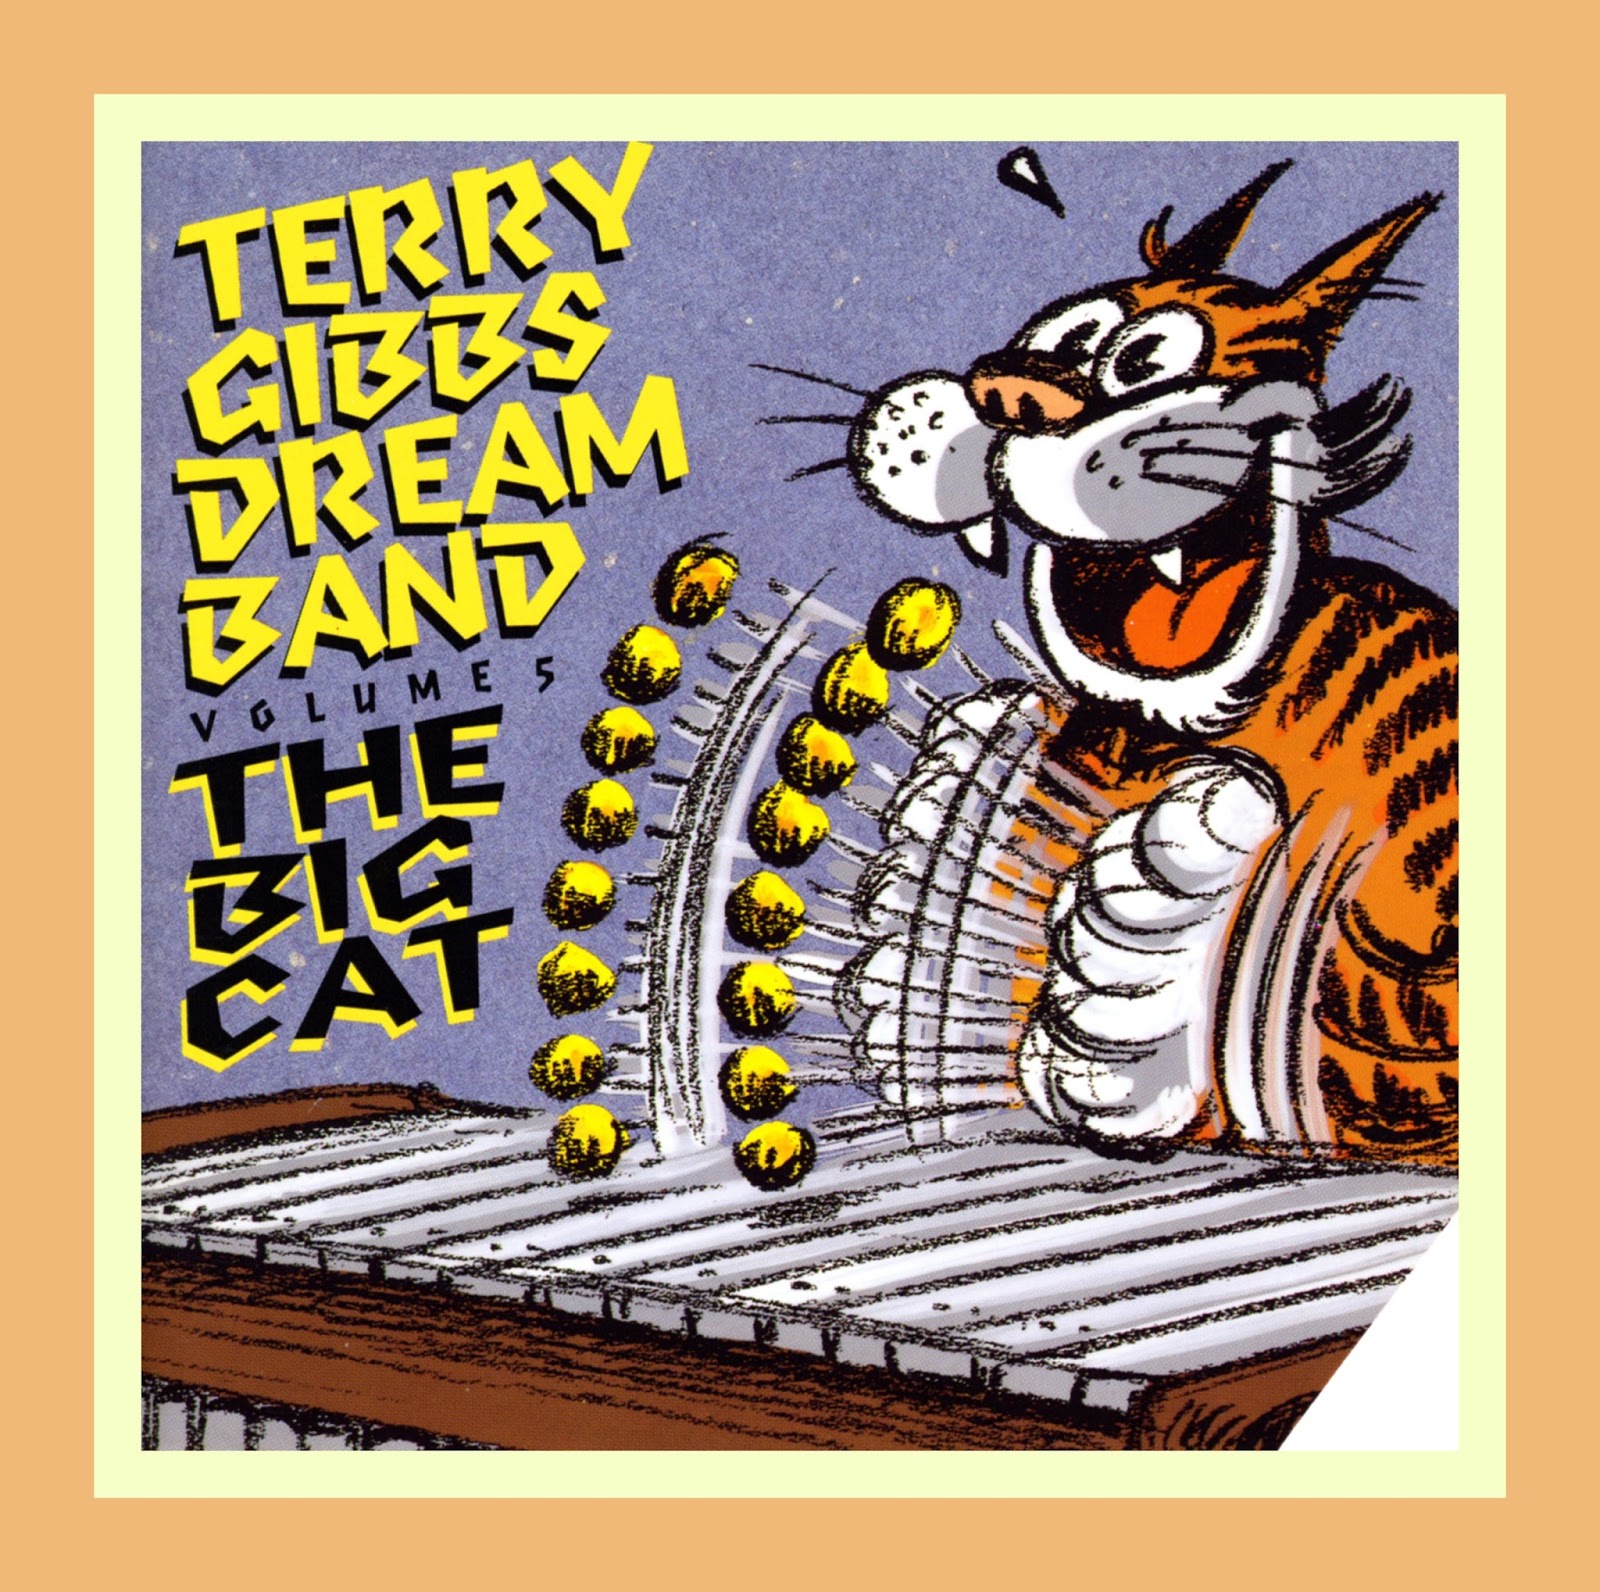 Terry+Gibbs+-+The+Big+Cat+v+5+005.jpg